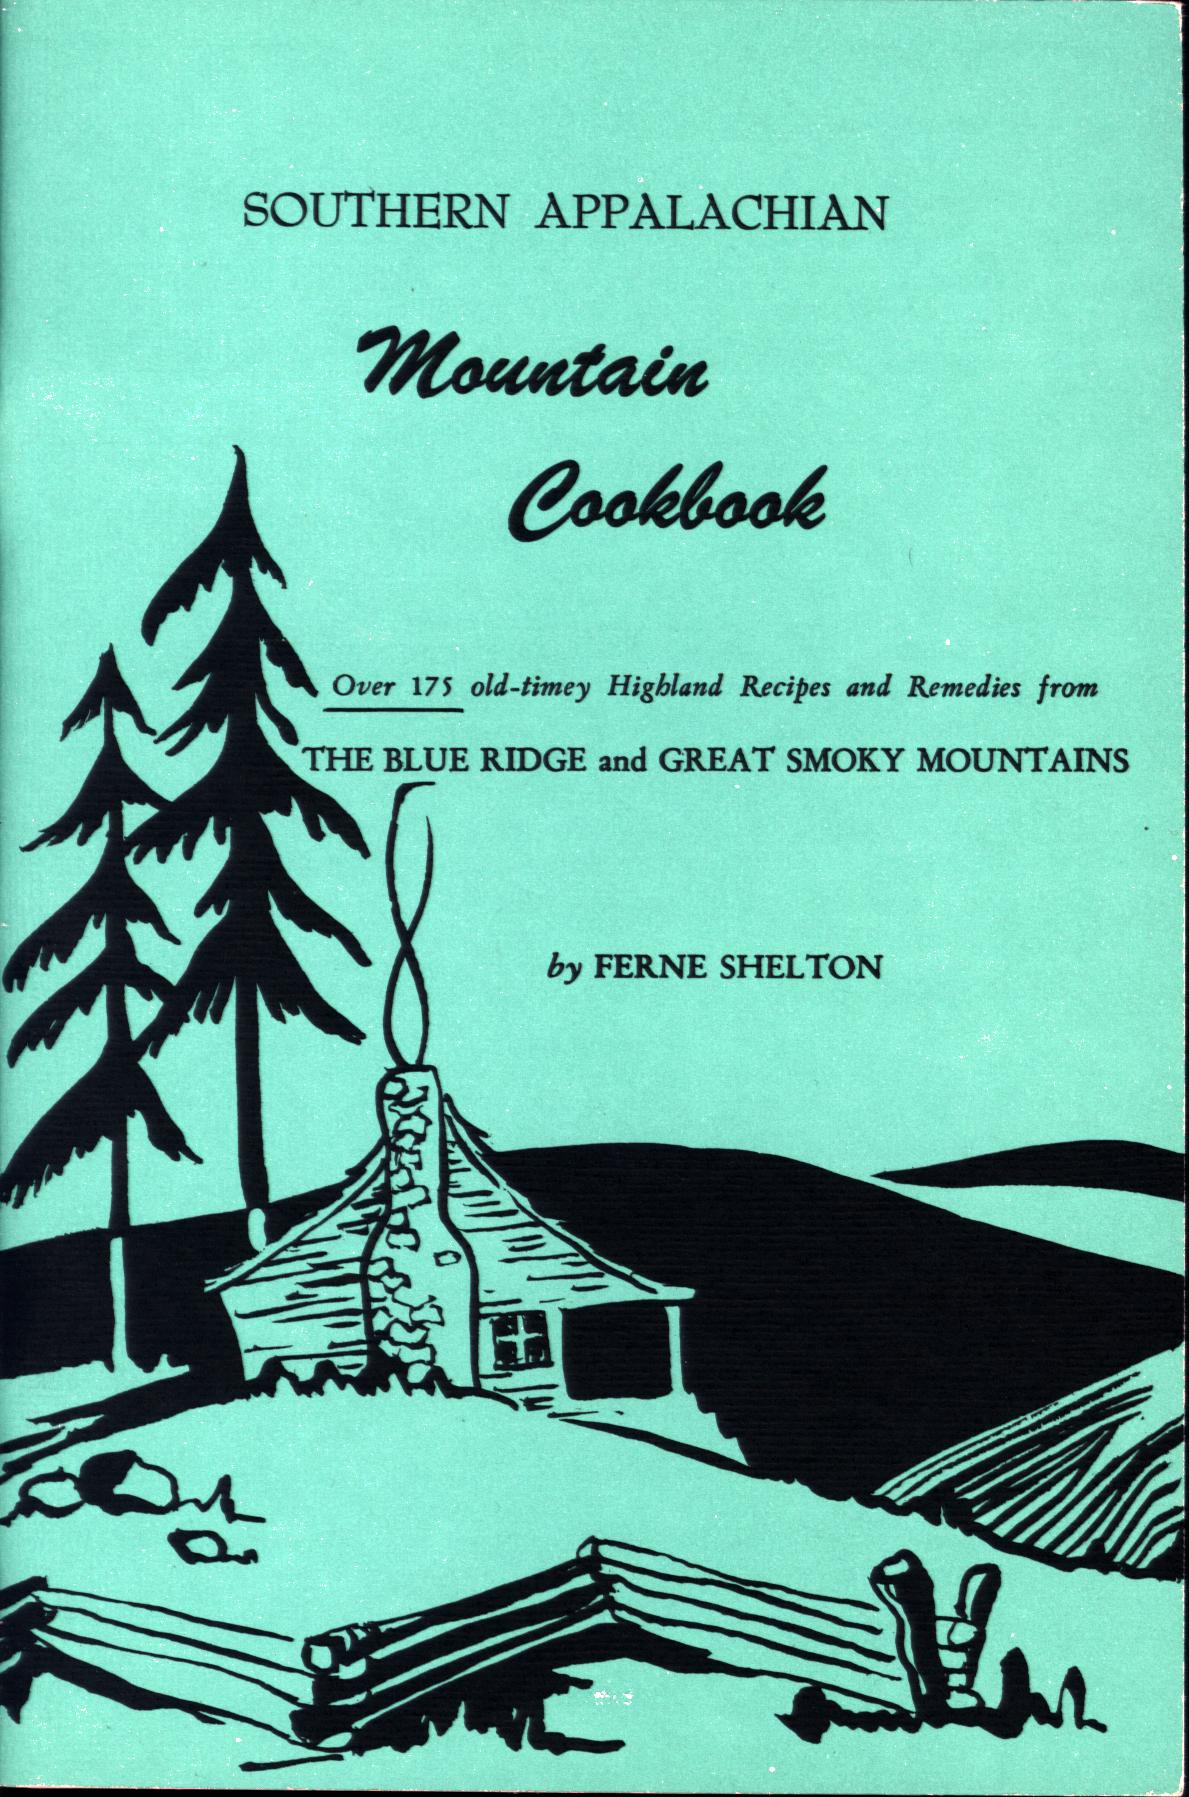 SOUTHERN APPALACHIAN MOUNTAIN COOK BOOK.